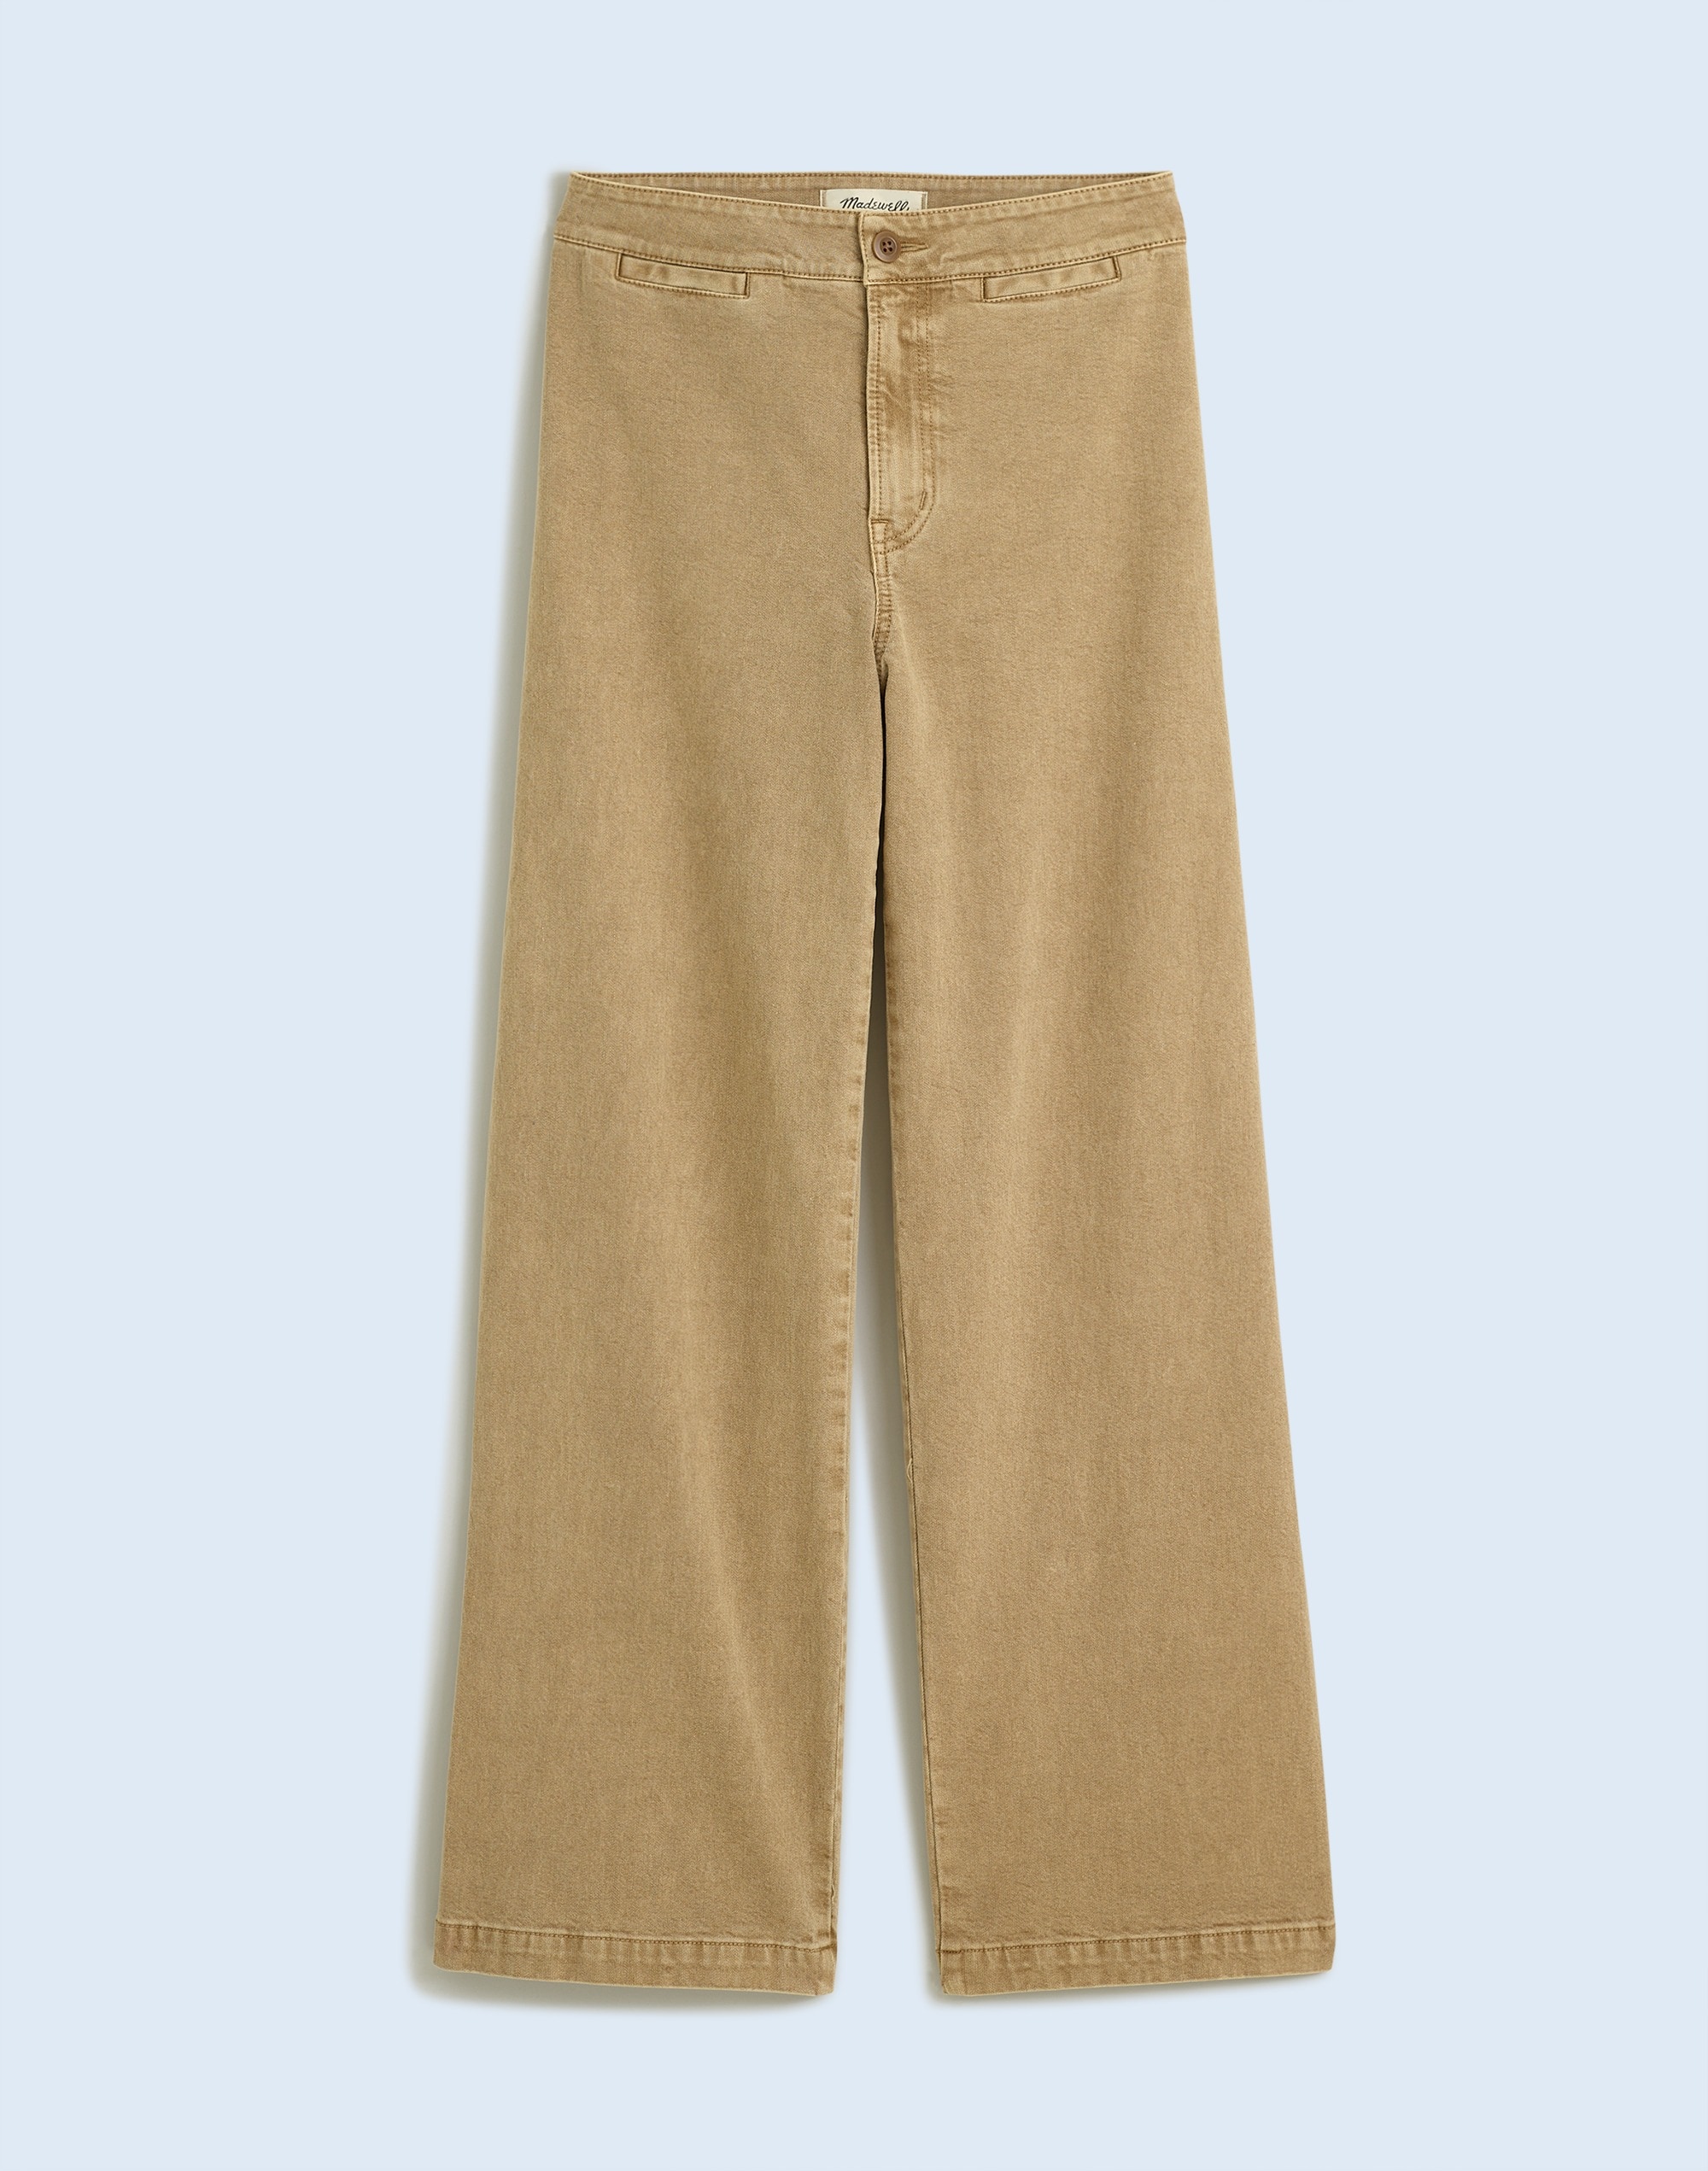 The Tall Curvy Emmett Wide-Leg Crop Pant in Garment Dye: Welt Pocket Edition